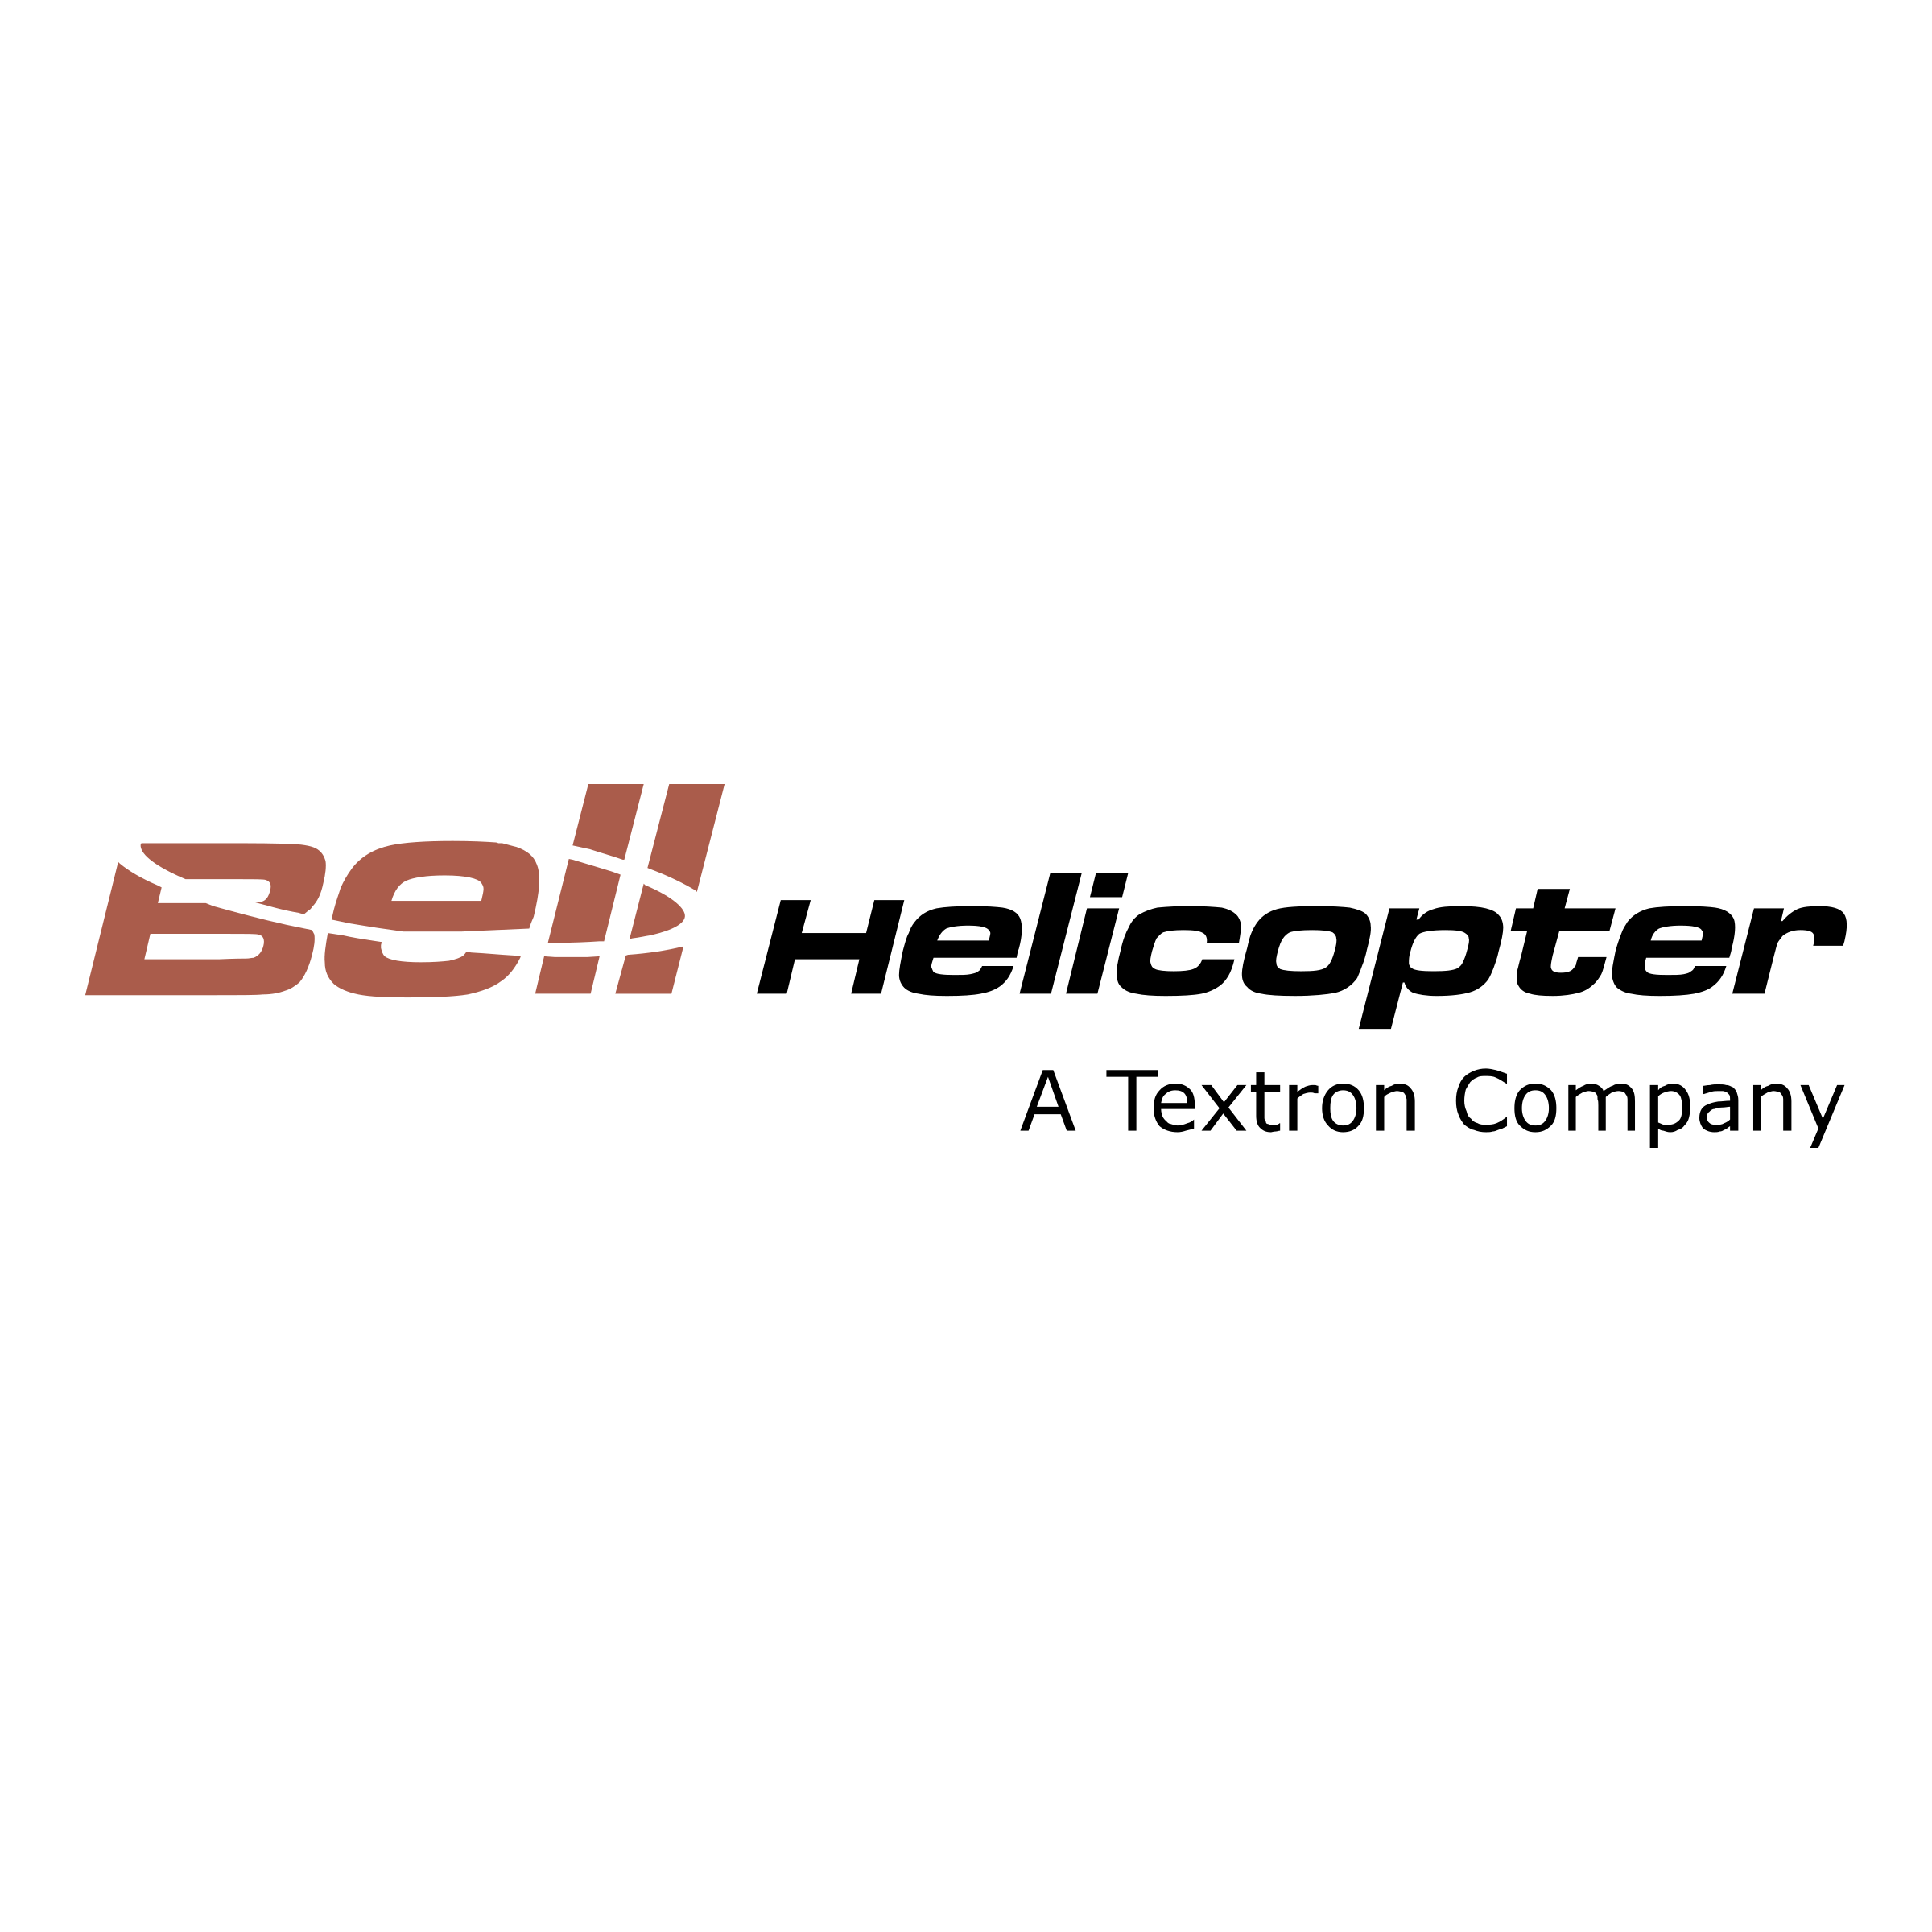 Helicopter Logo - Bell Helicopter Logo PNG Transparent & SVG Vector